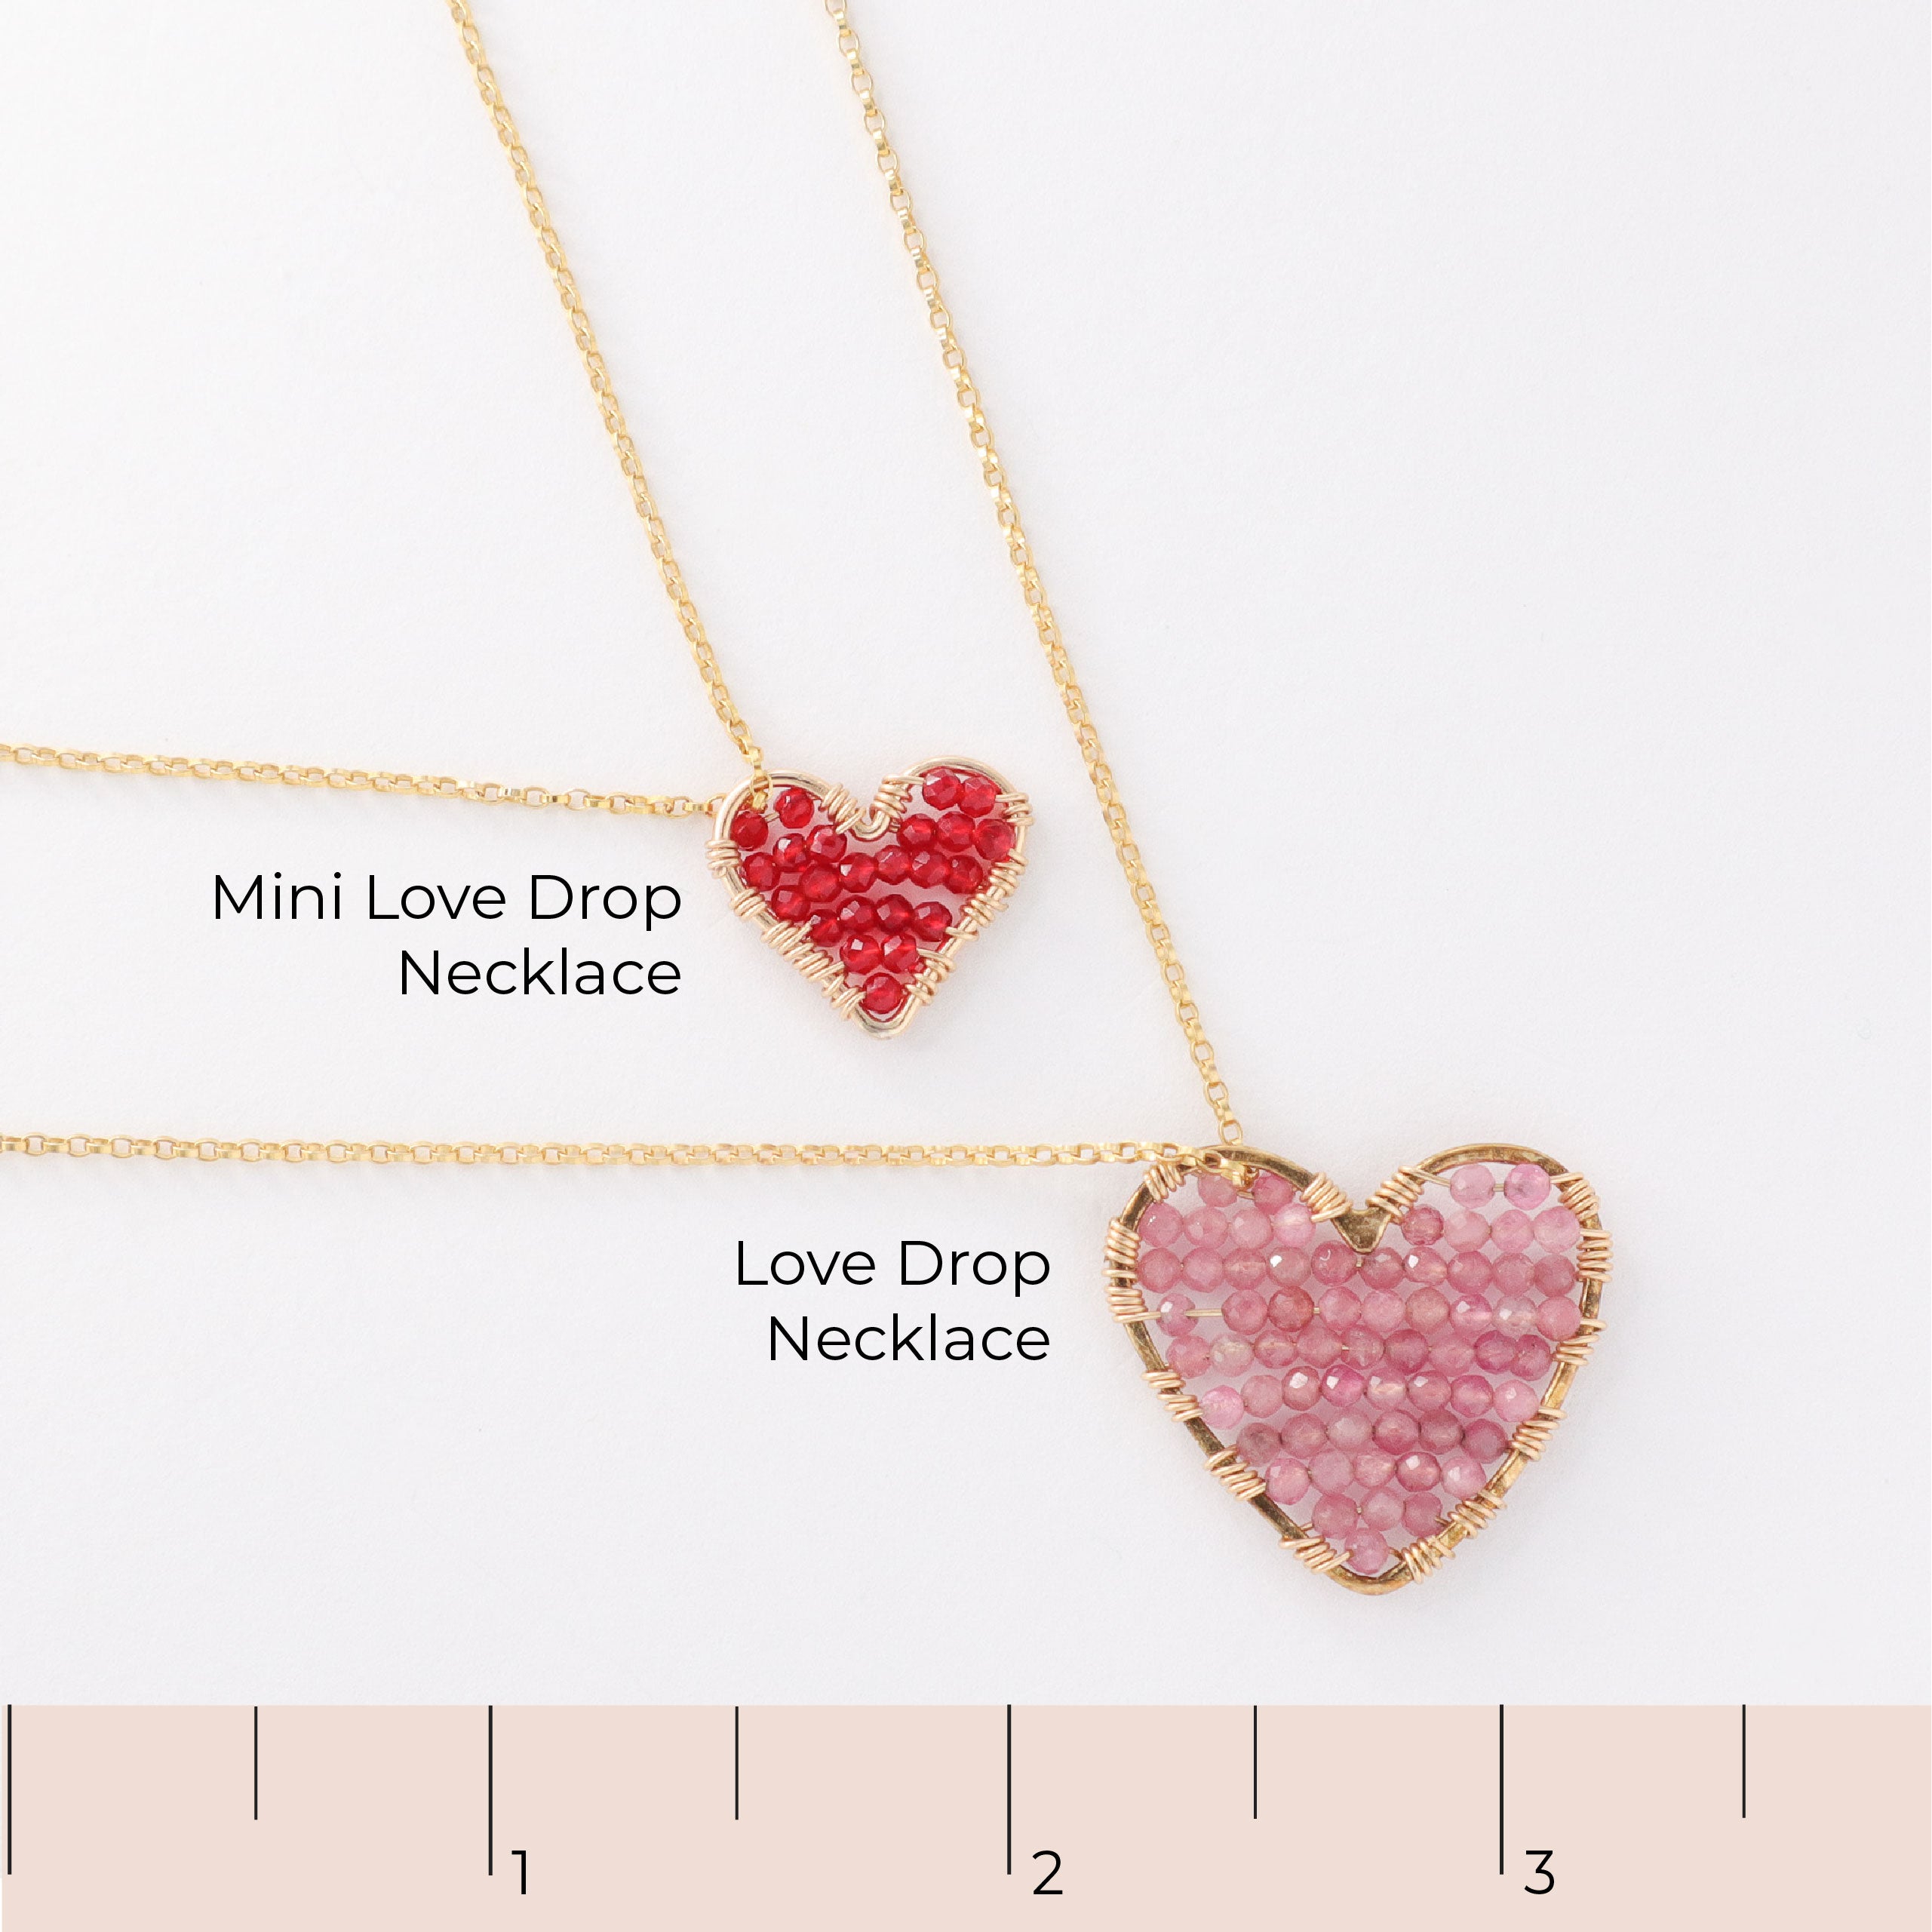 Love Drop Necklaces Size Guide